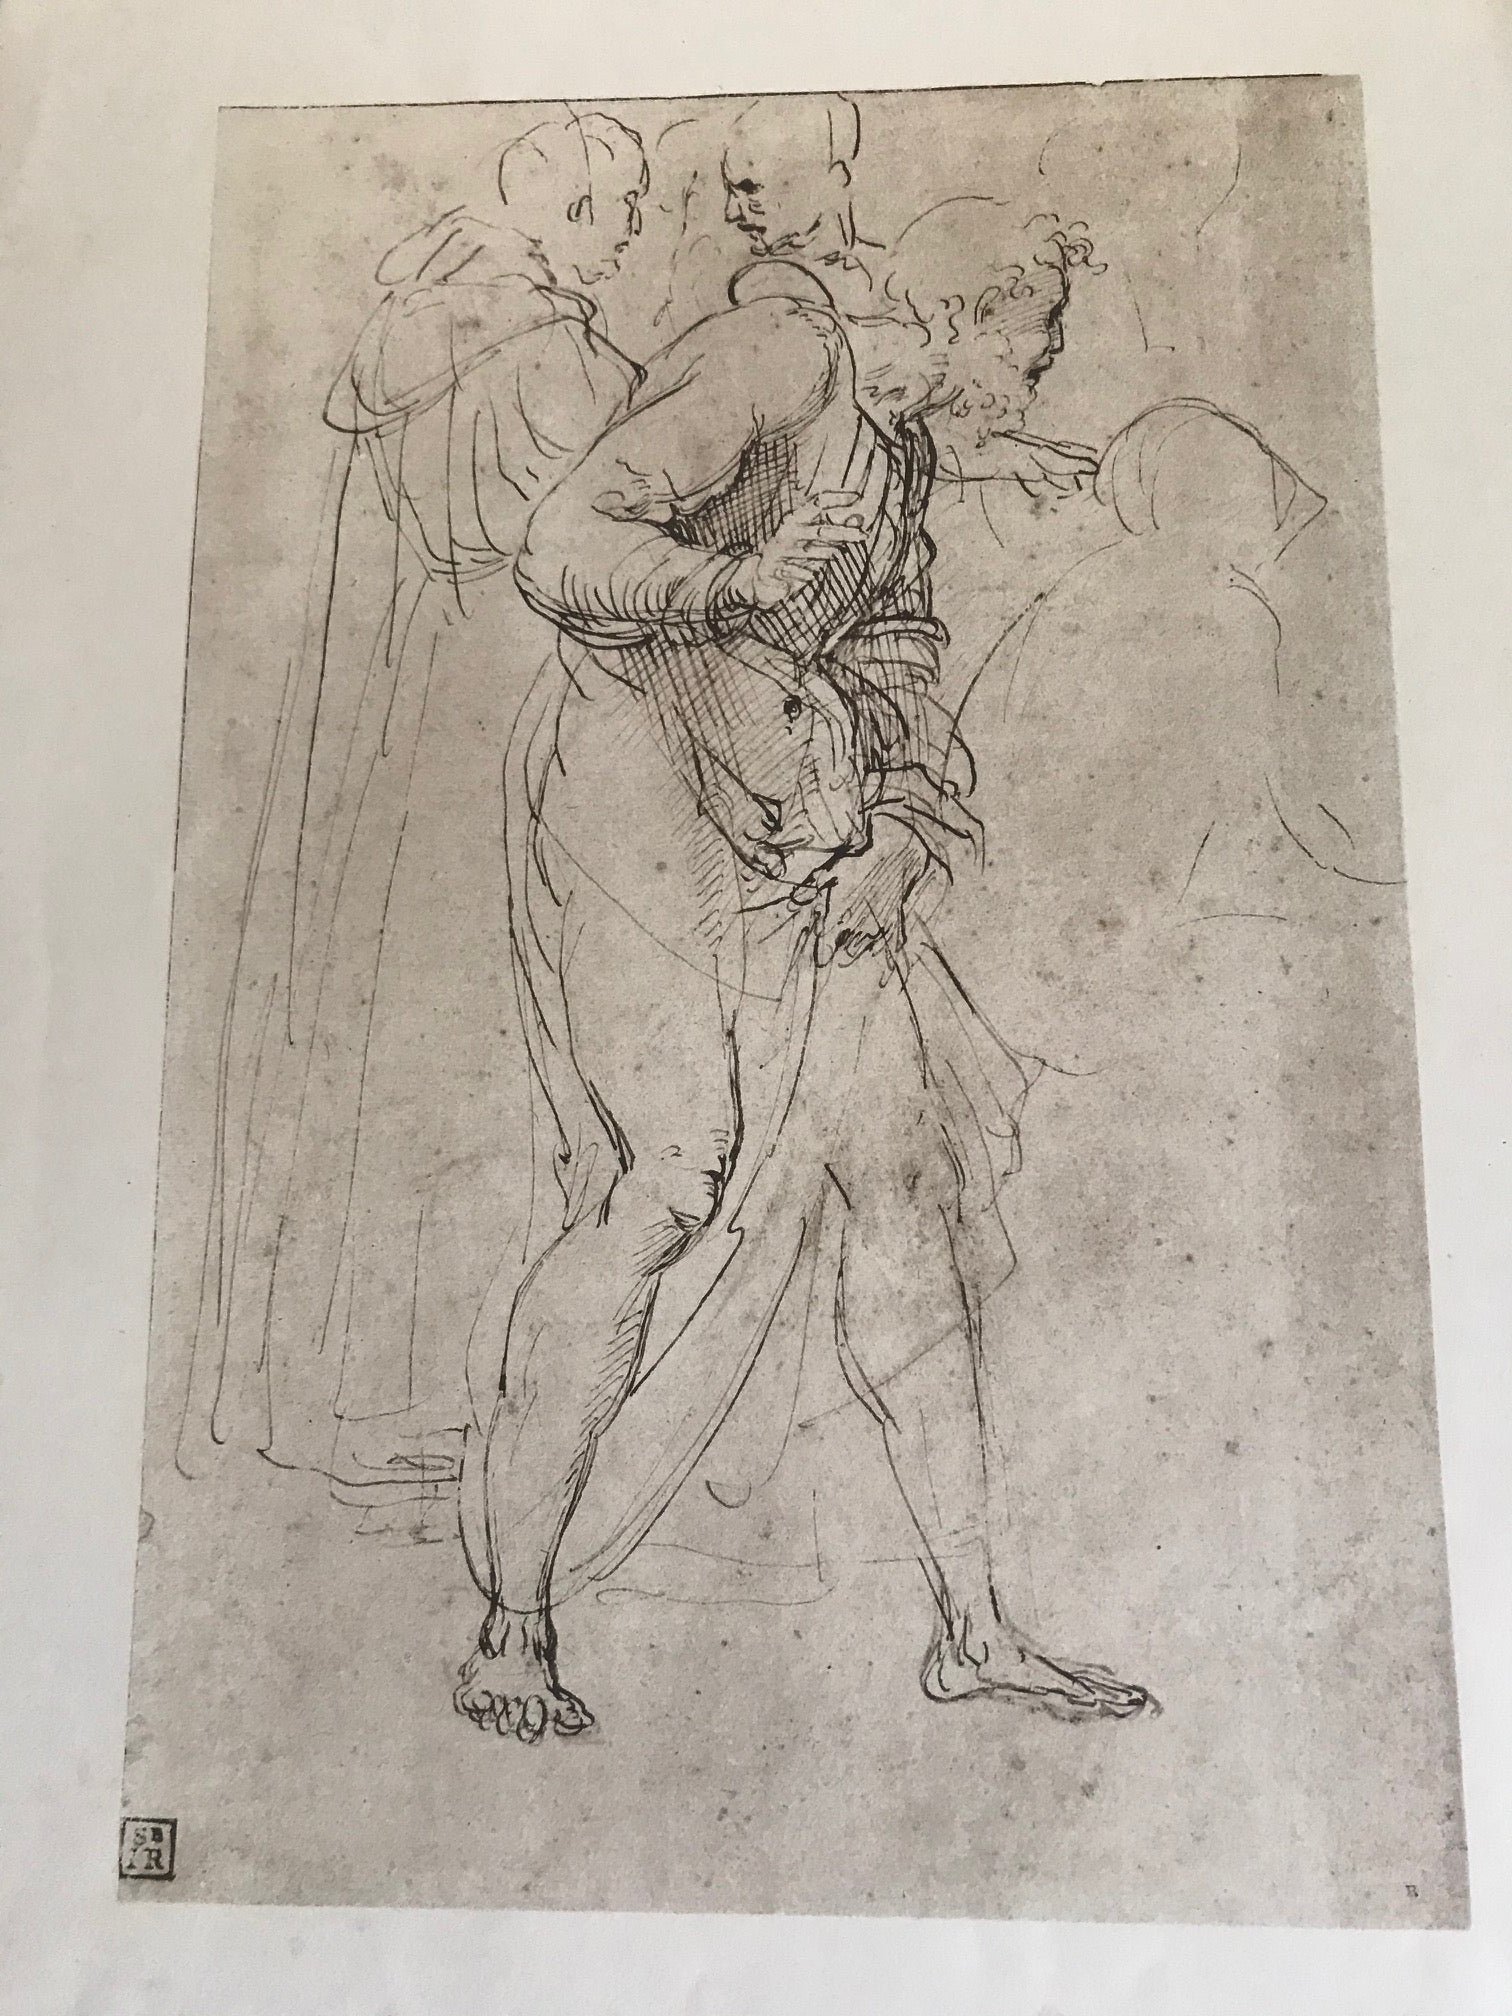 1924 Vasari Society print of Raphael's 1510 drawing Studies for the Disputa